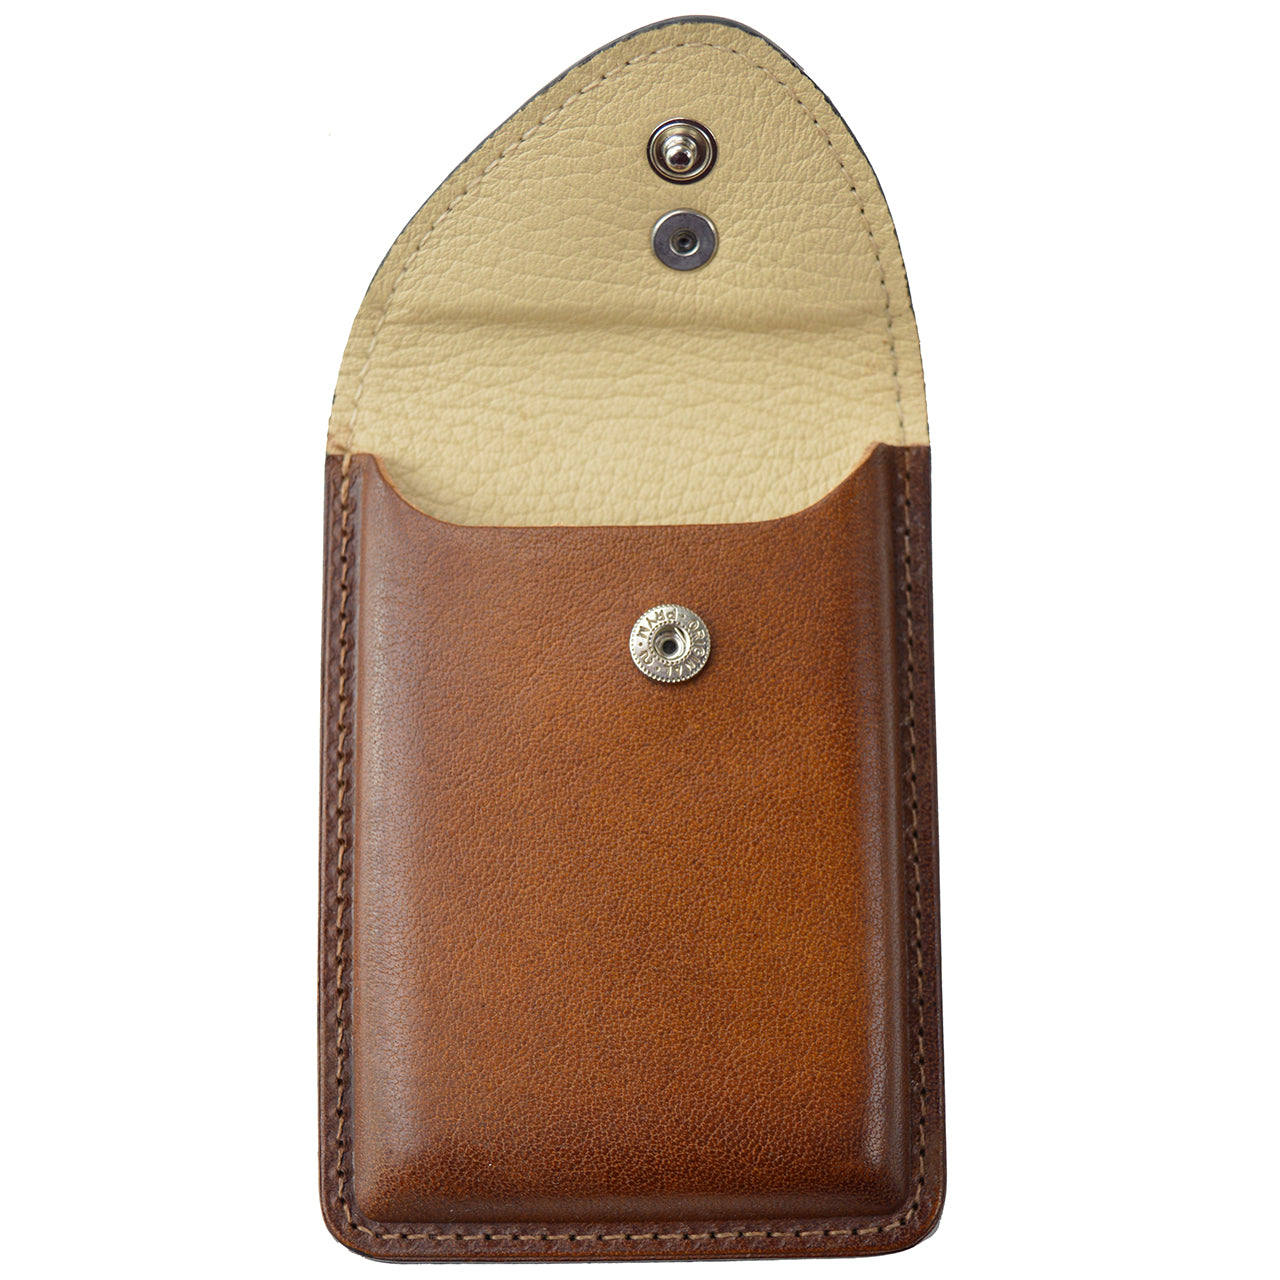 Pratesi Cardholder B061 in genuine Italian leather